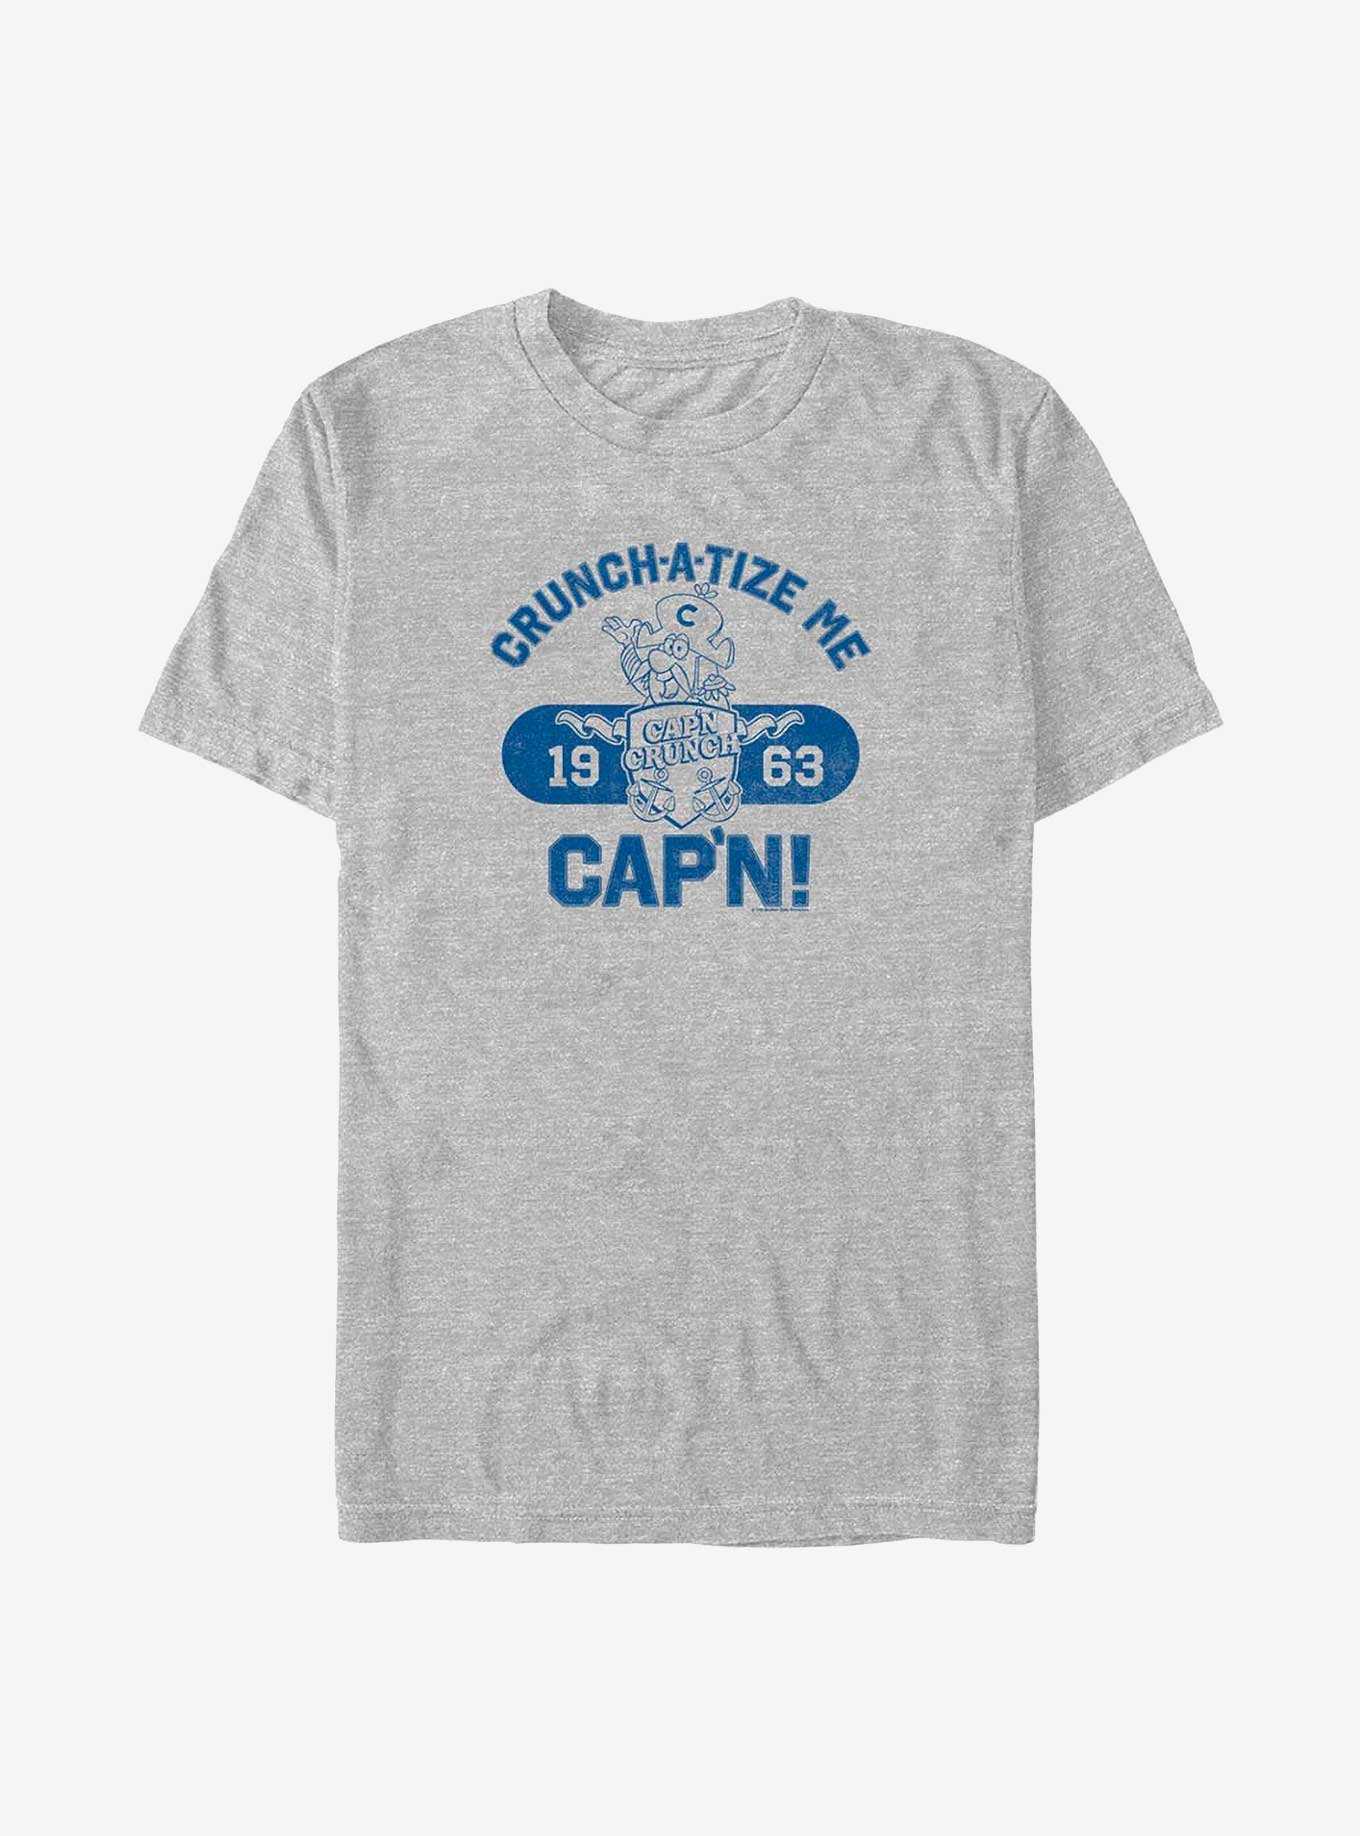 Capn Crunch Collegiate T-Shirt, , hi-res